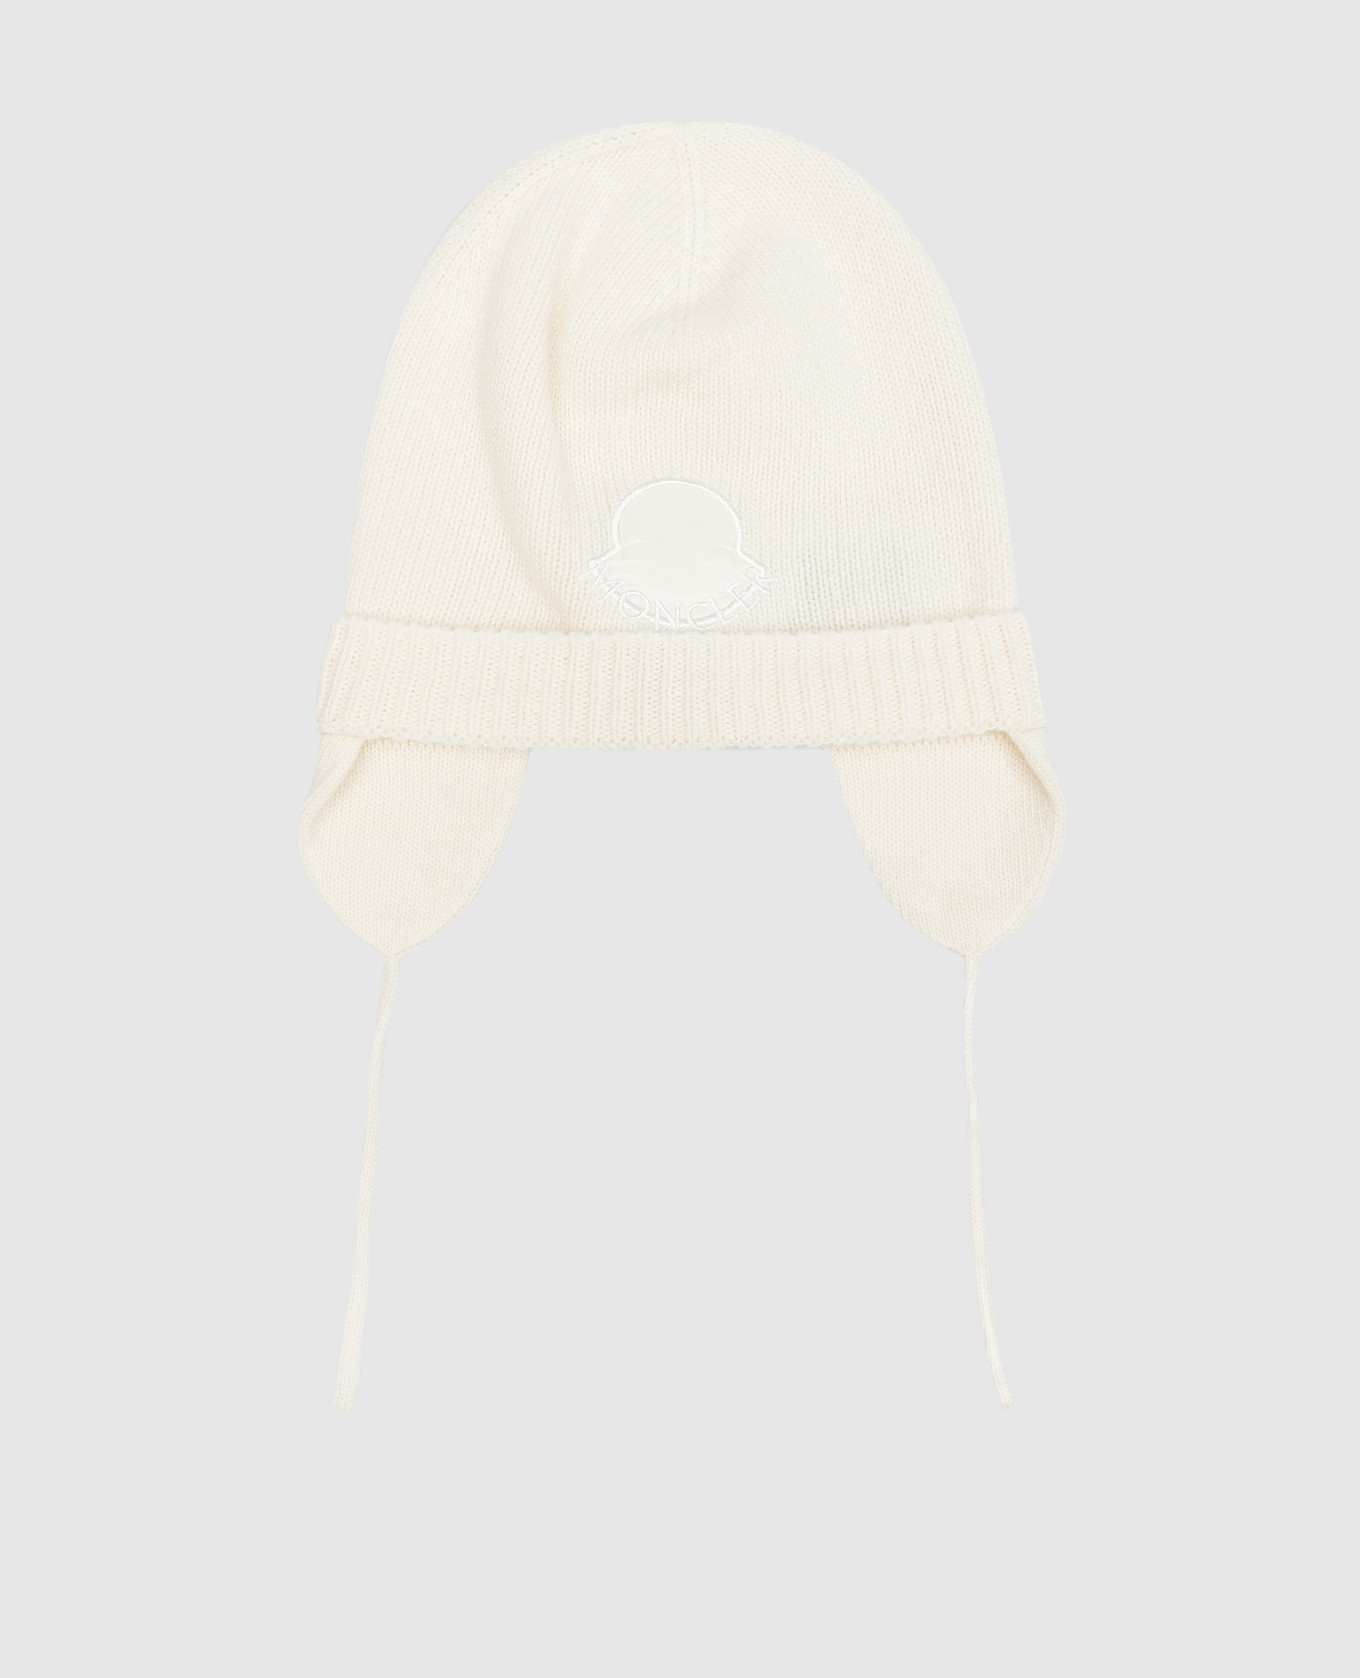 Children's white hat made of wool